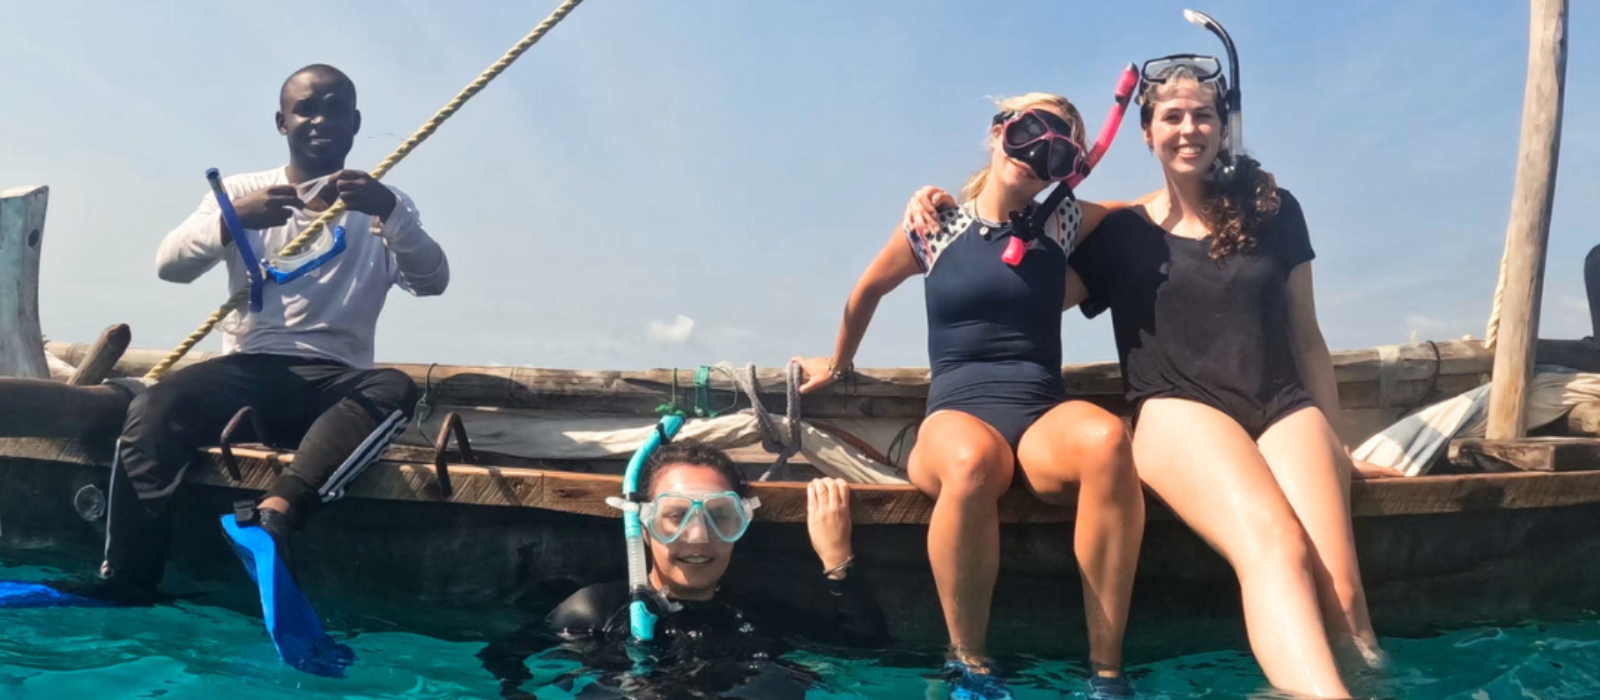 volunteers wearing snorkeling masks while on the sea